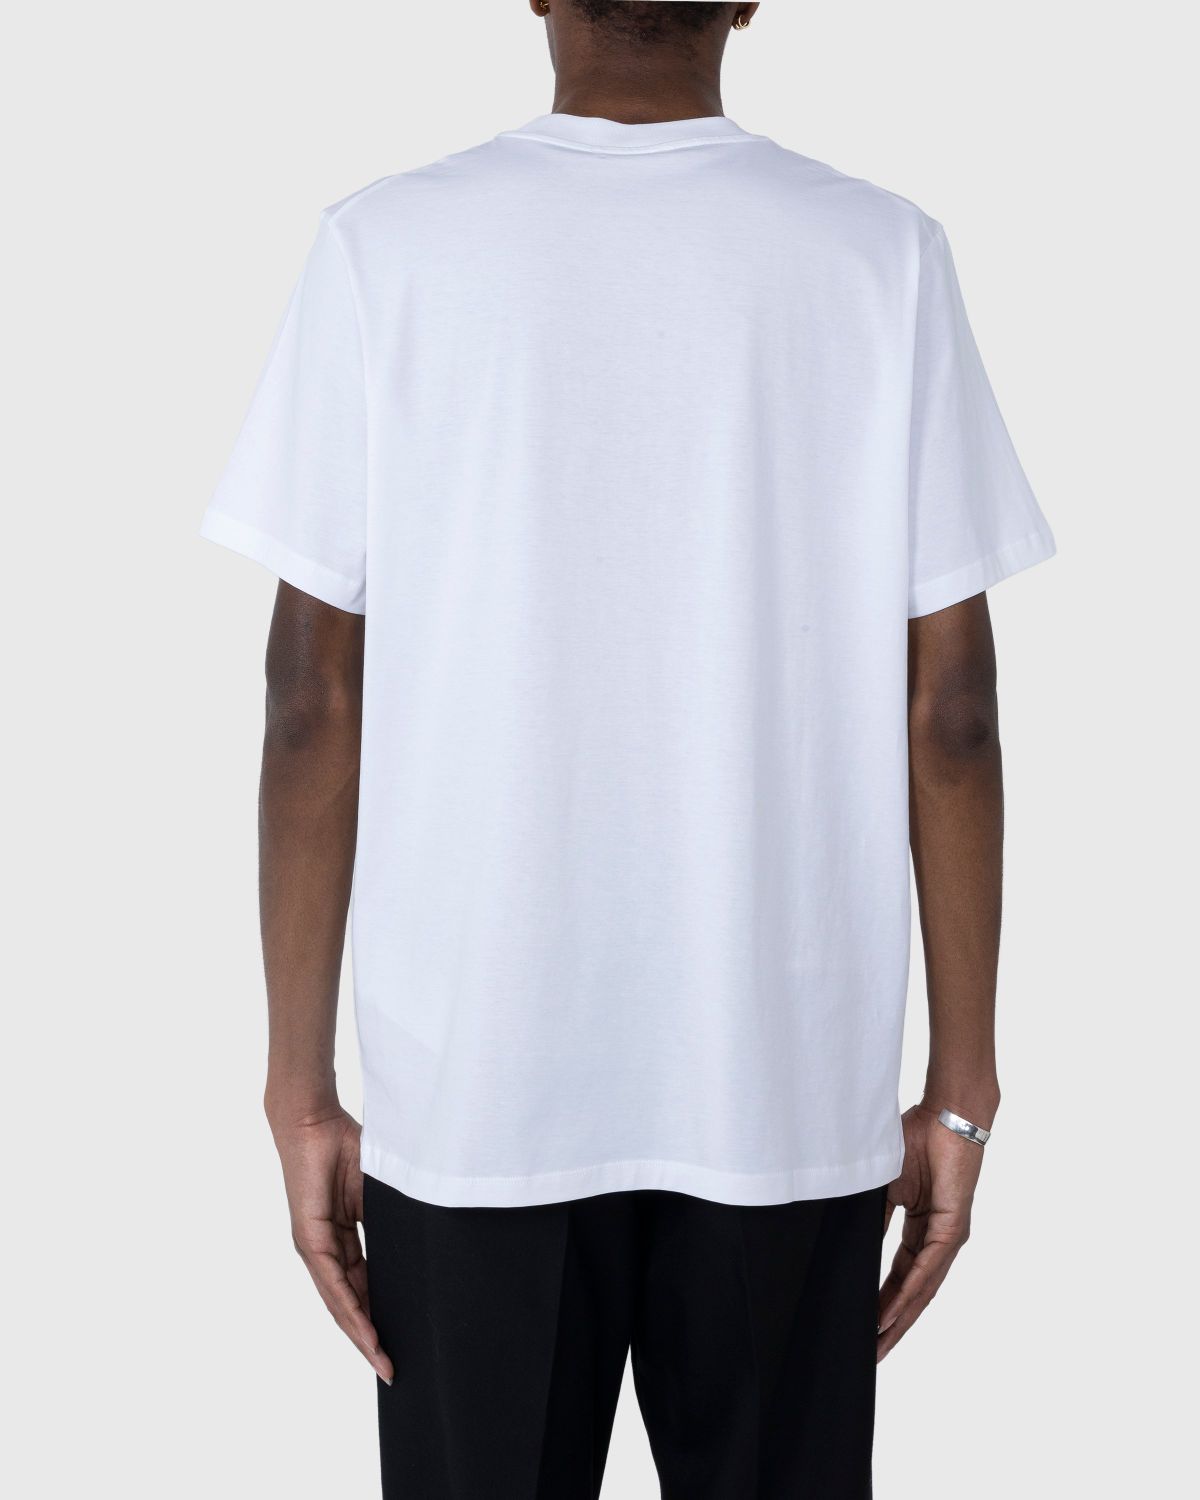 Jil Sander – Solid Cotton T-Shirt White - Tops - White - Image 4